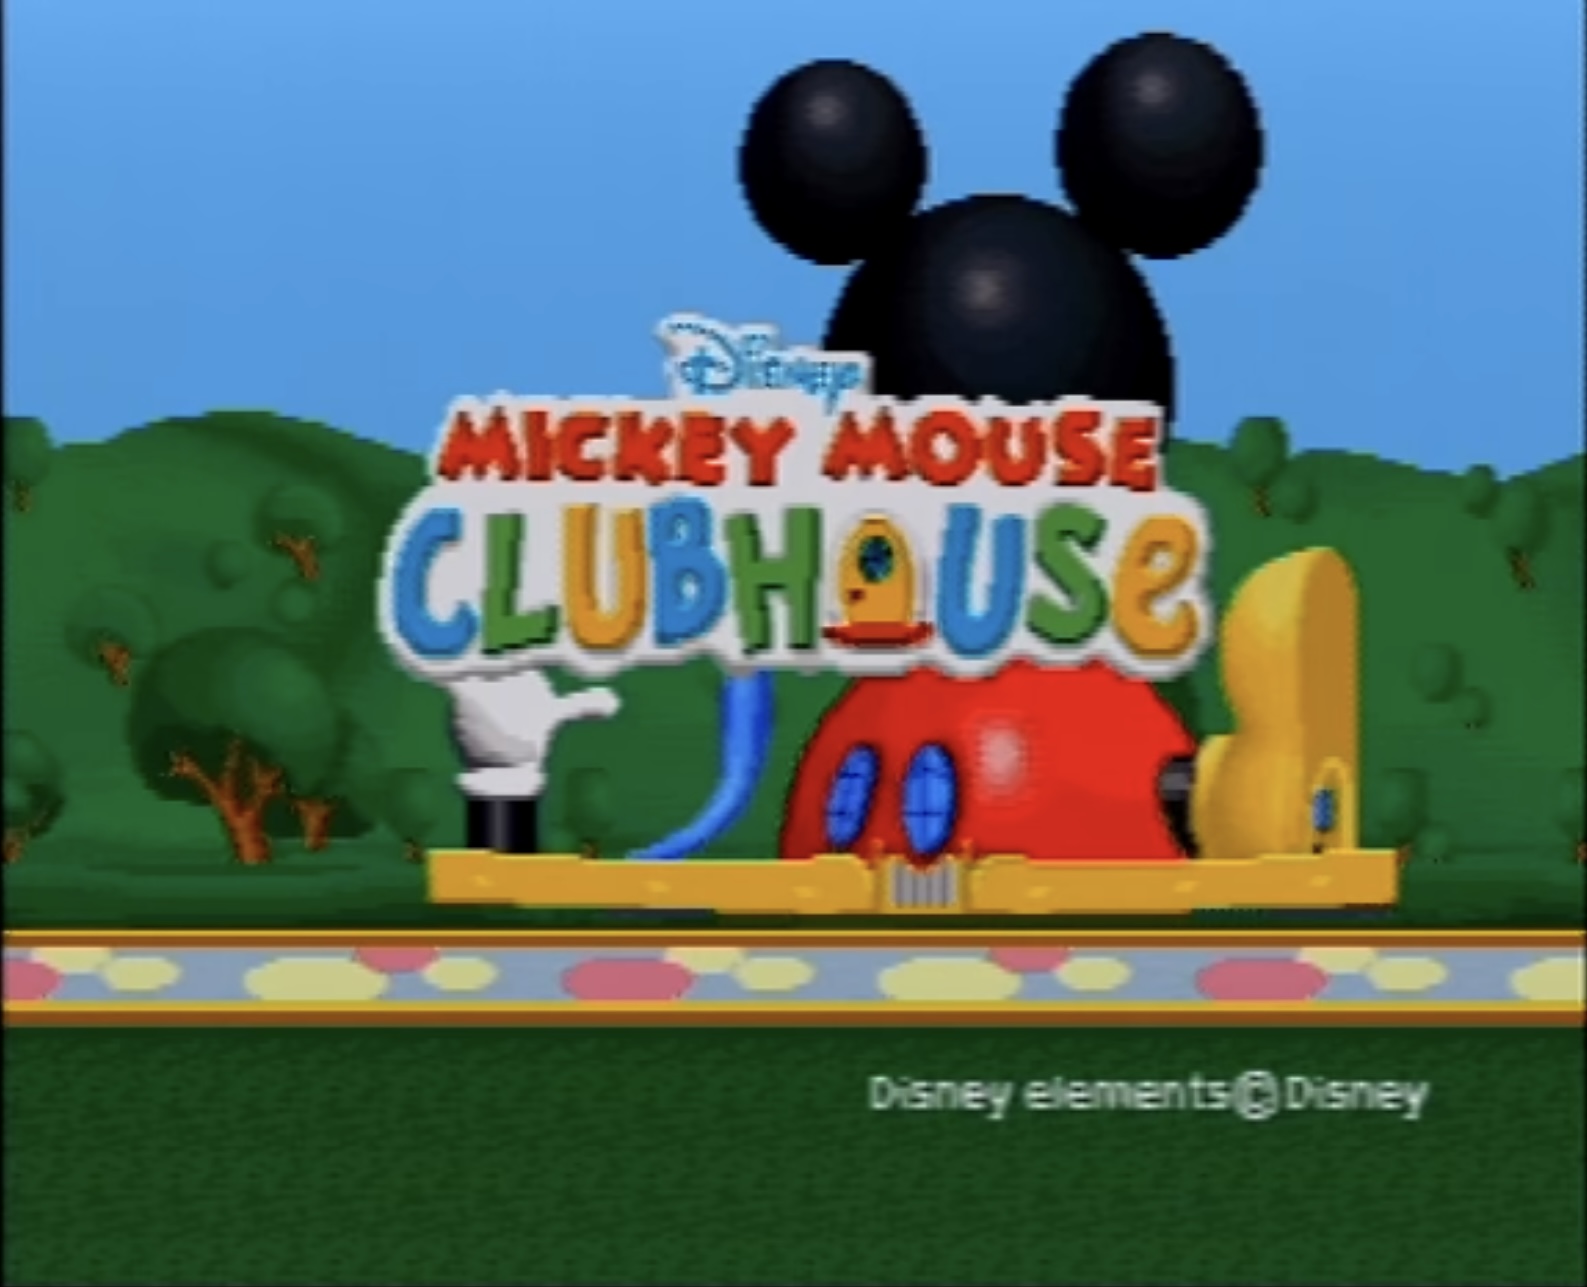 Mickey Mouse Clubhouse (V.Smile), VTech Wiki